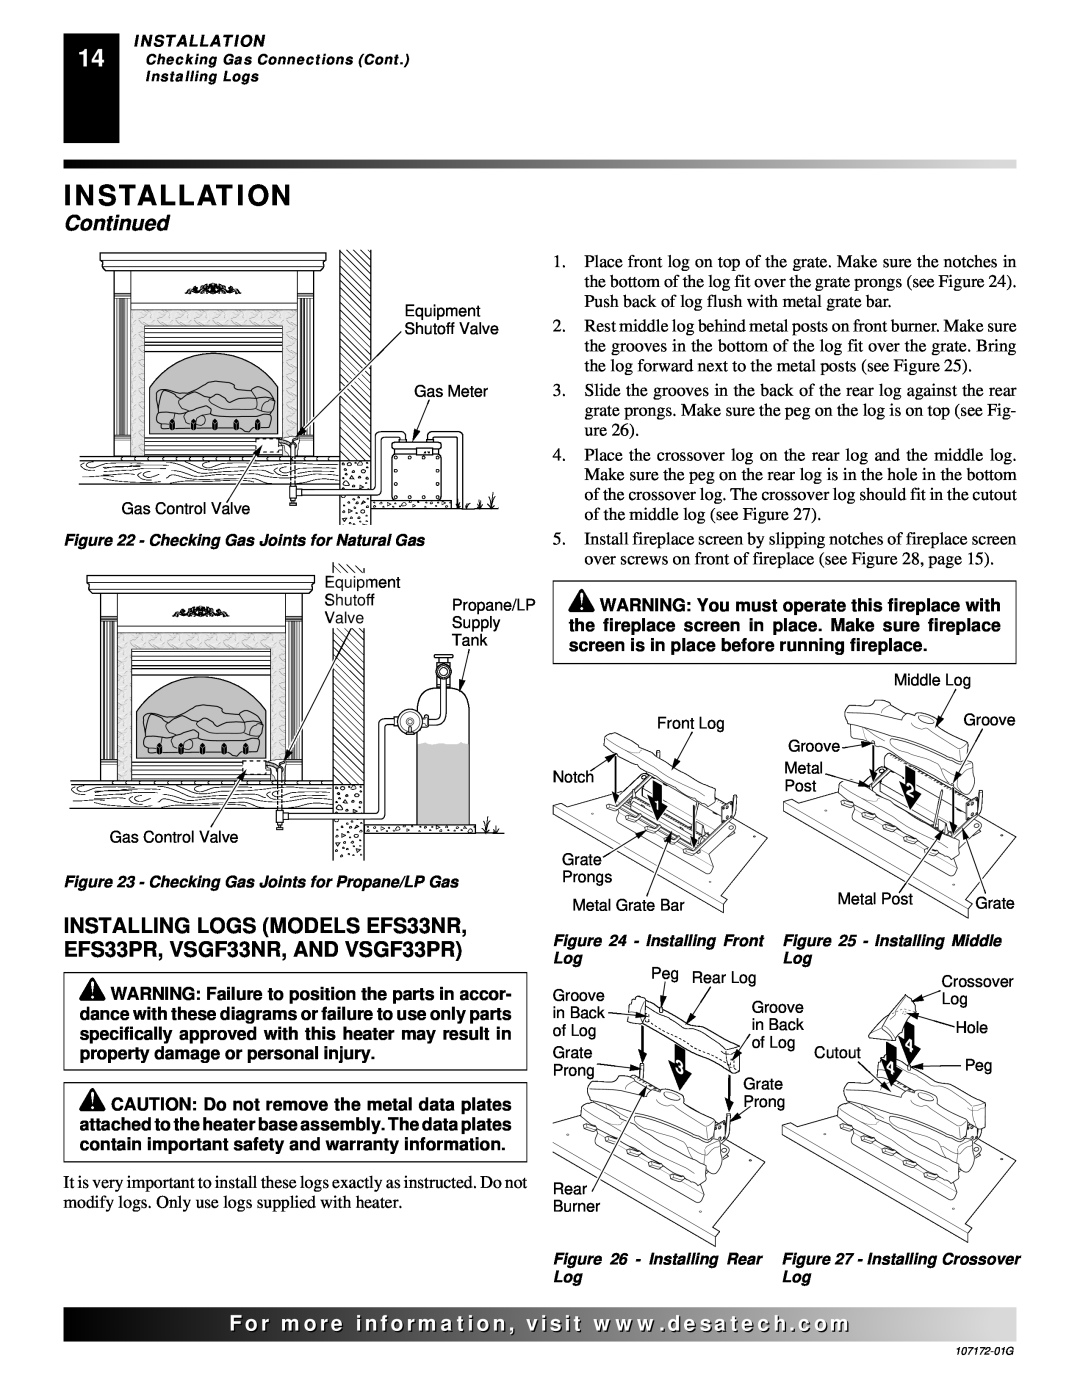 Desa VSGF33PRA installation manual Installation, Continued, Push back of log flush with metal grate bar 